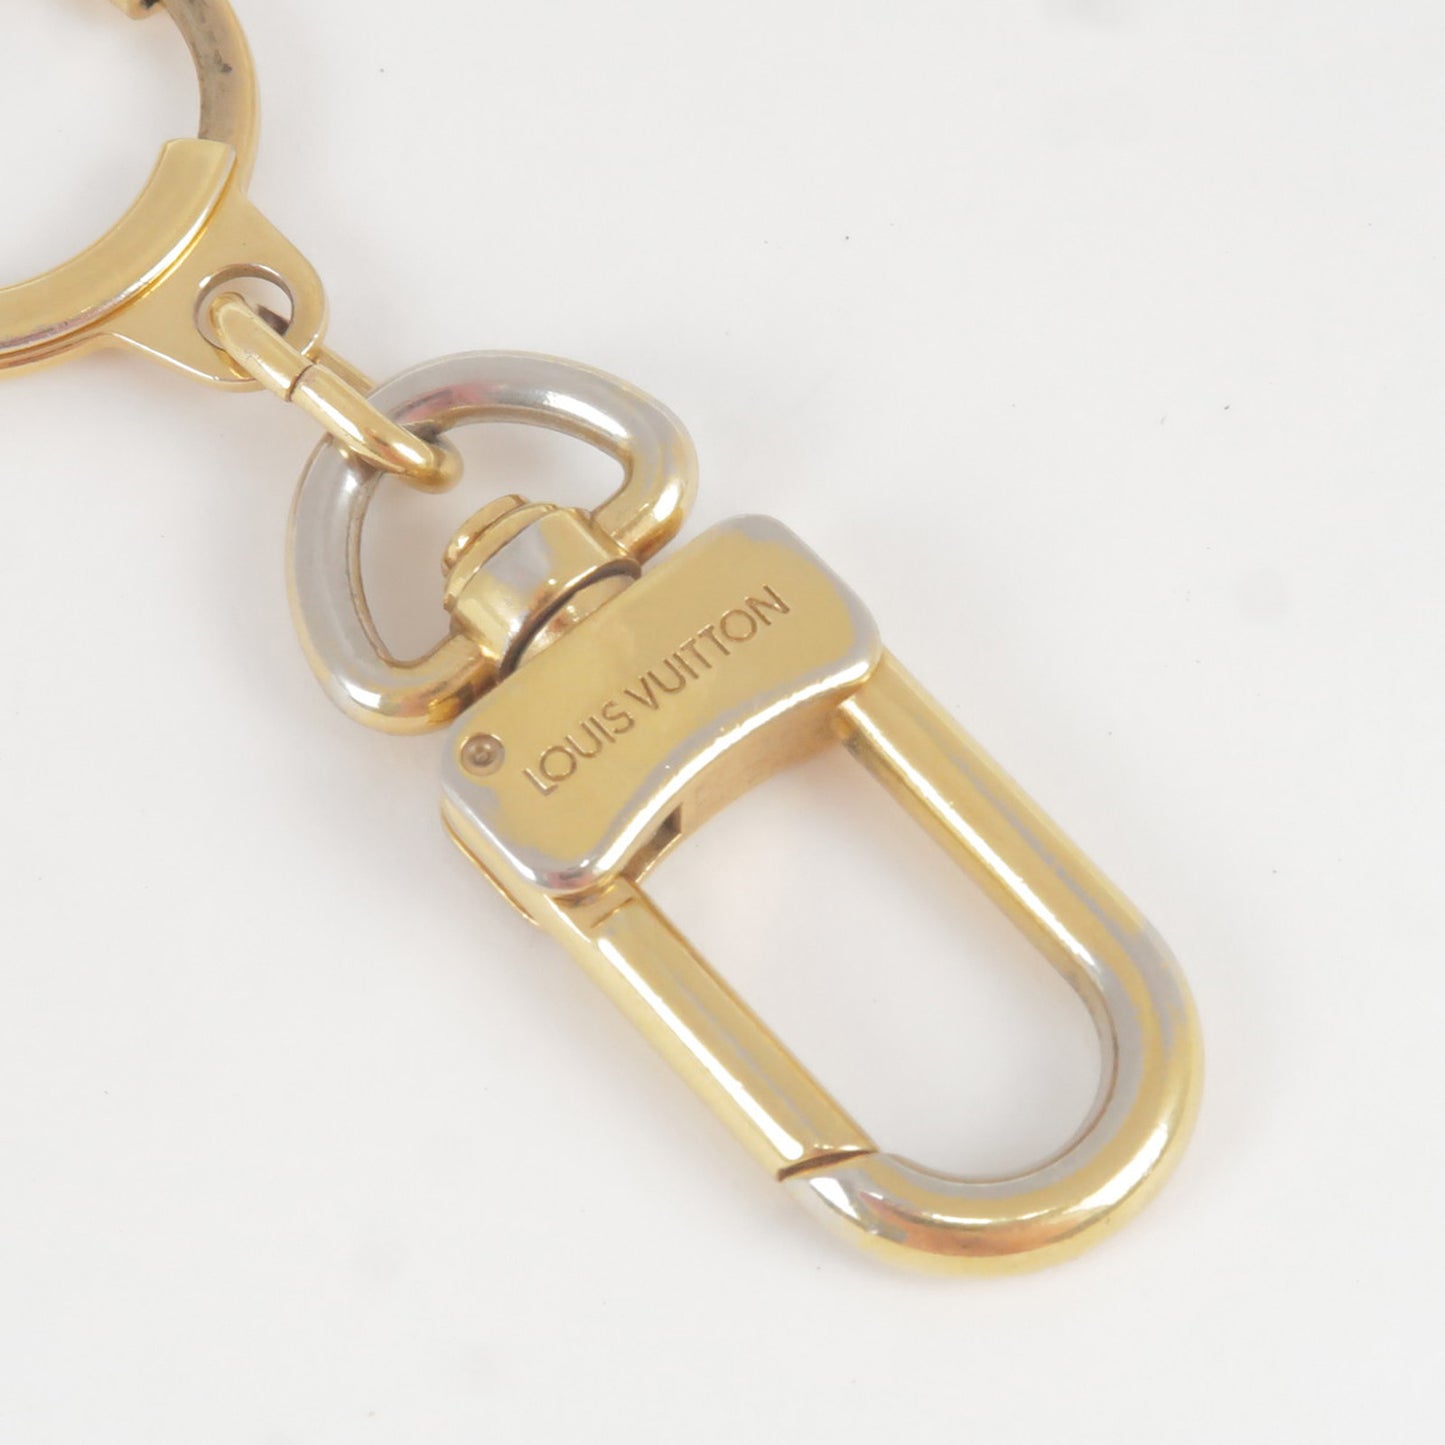 Louis Vuitton Ano Cles Key Chain Key Chram Gold M62694